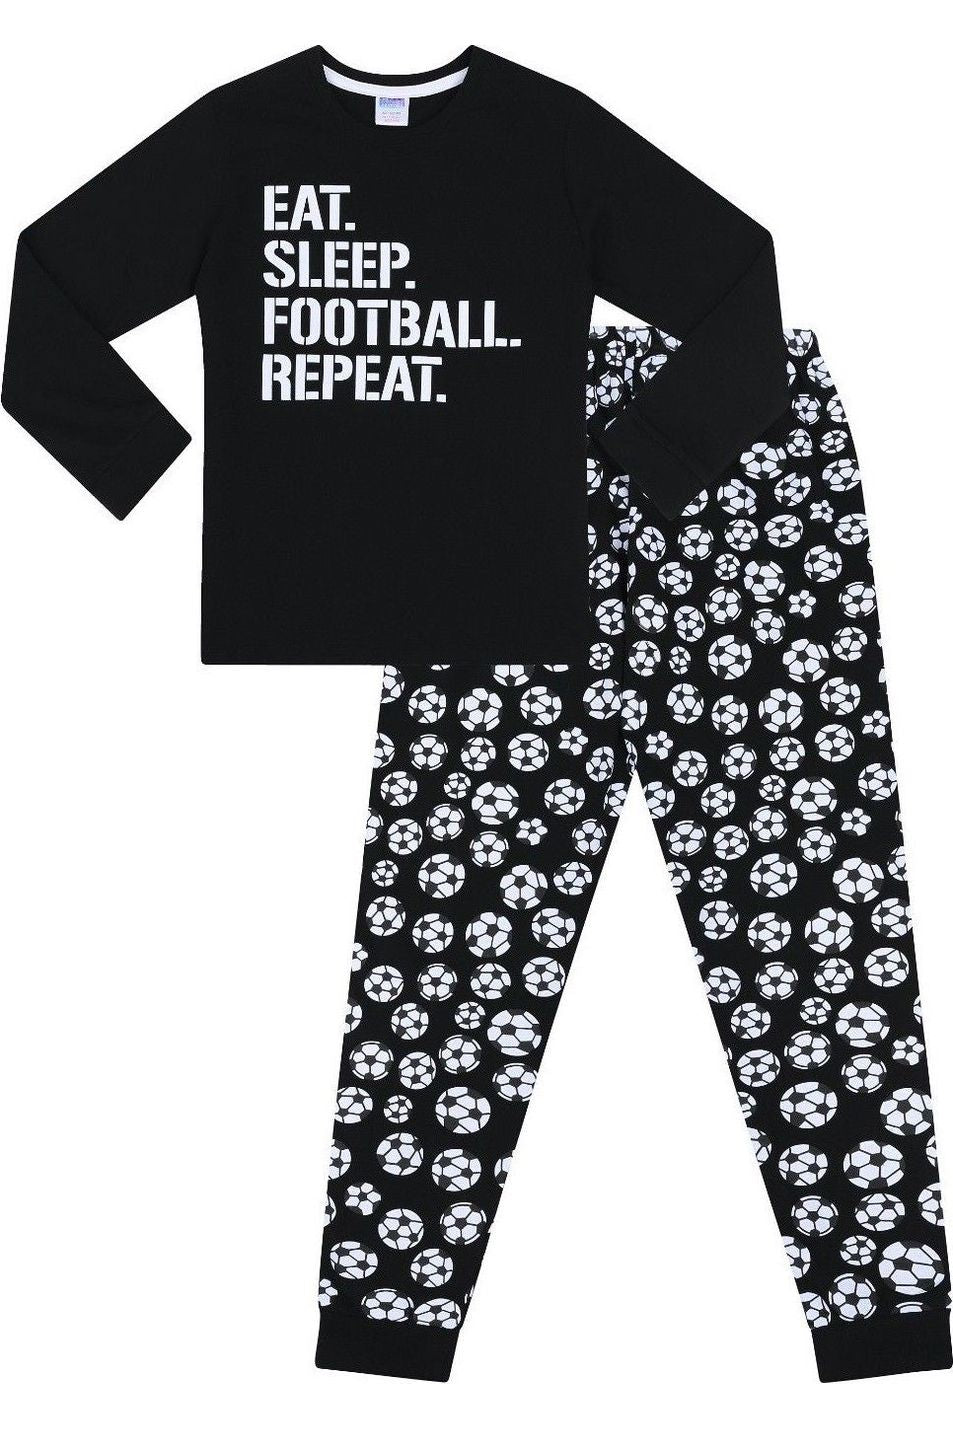 Eat Sleep Football Repeat Long Pyjamas - Pyjamas.com